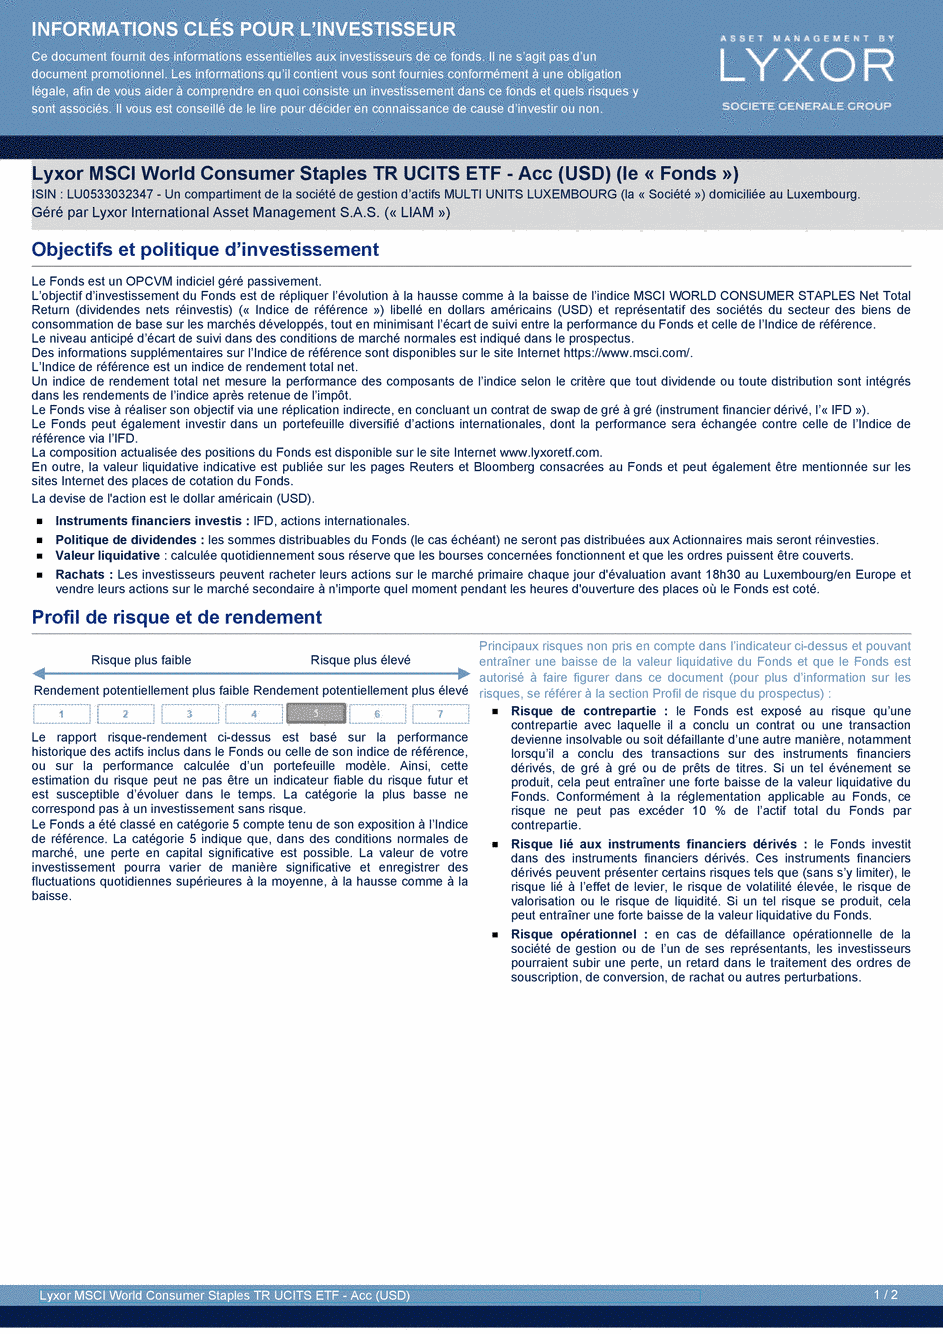 DICI Lyxor MSCI World Consumer Staples TR UCITS ETF - Acc (USD) - 10/07/2020 - Français